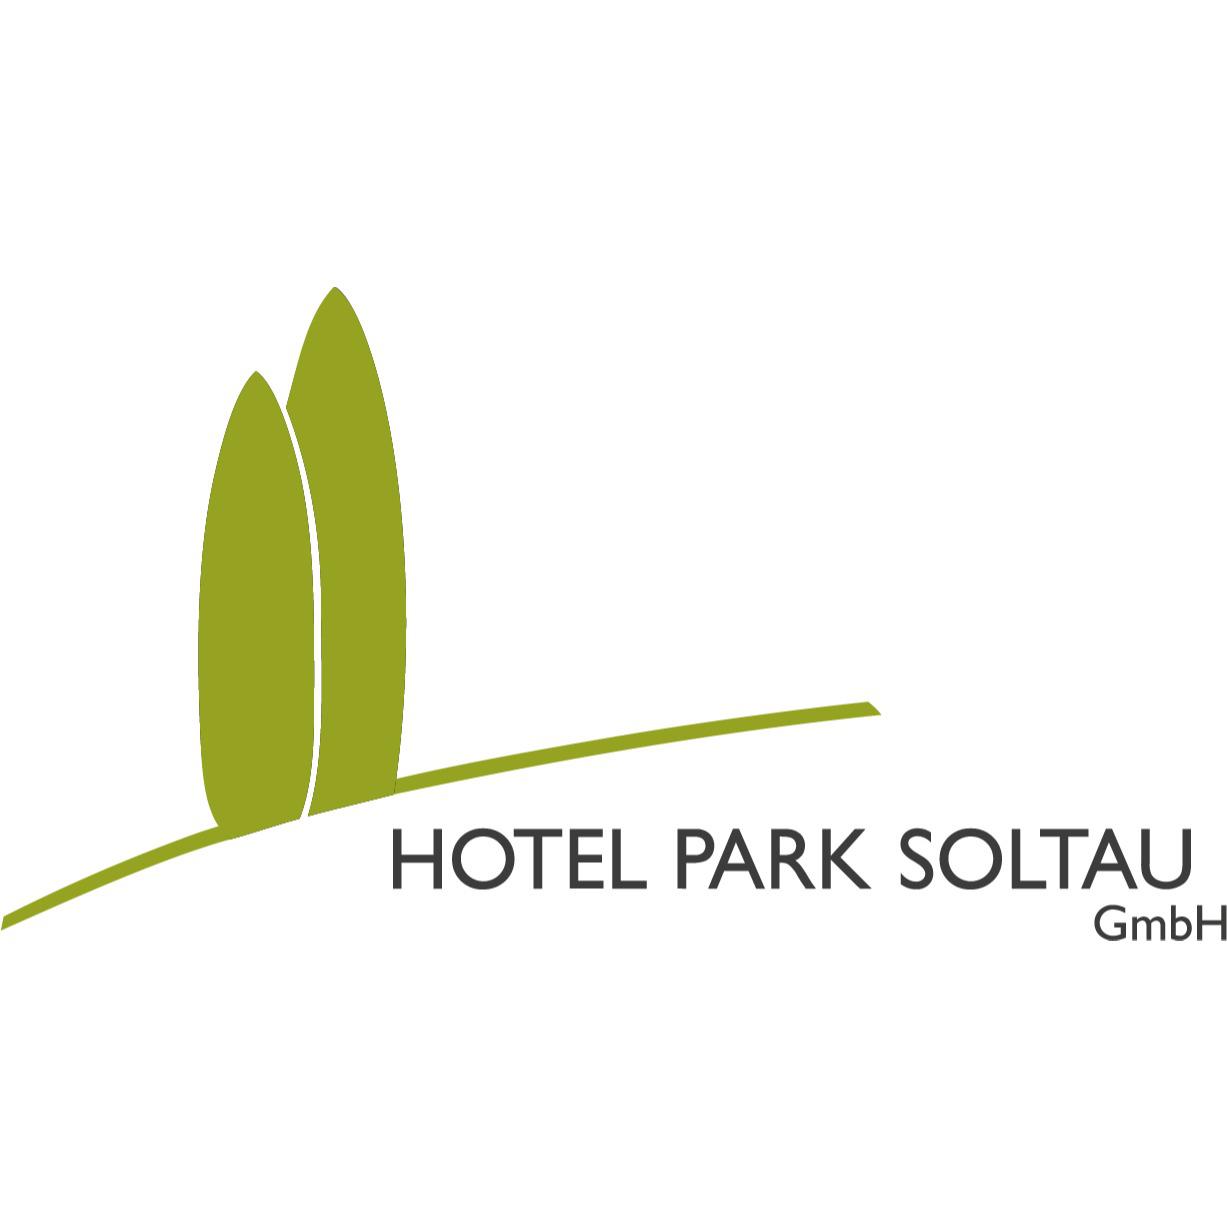 HOTEL PARK SOLTAU GmbH Logo